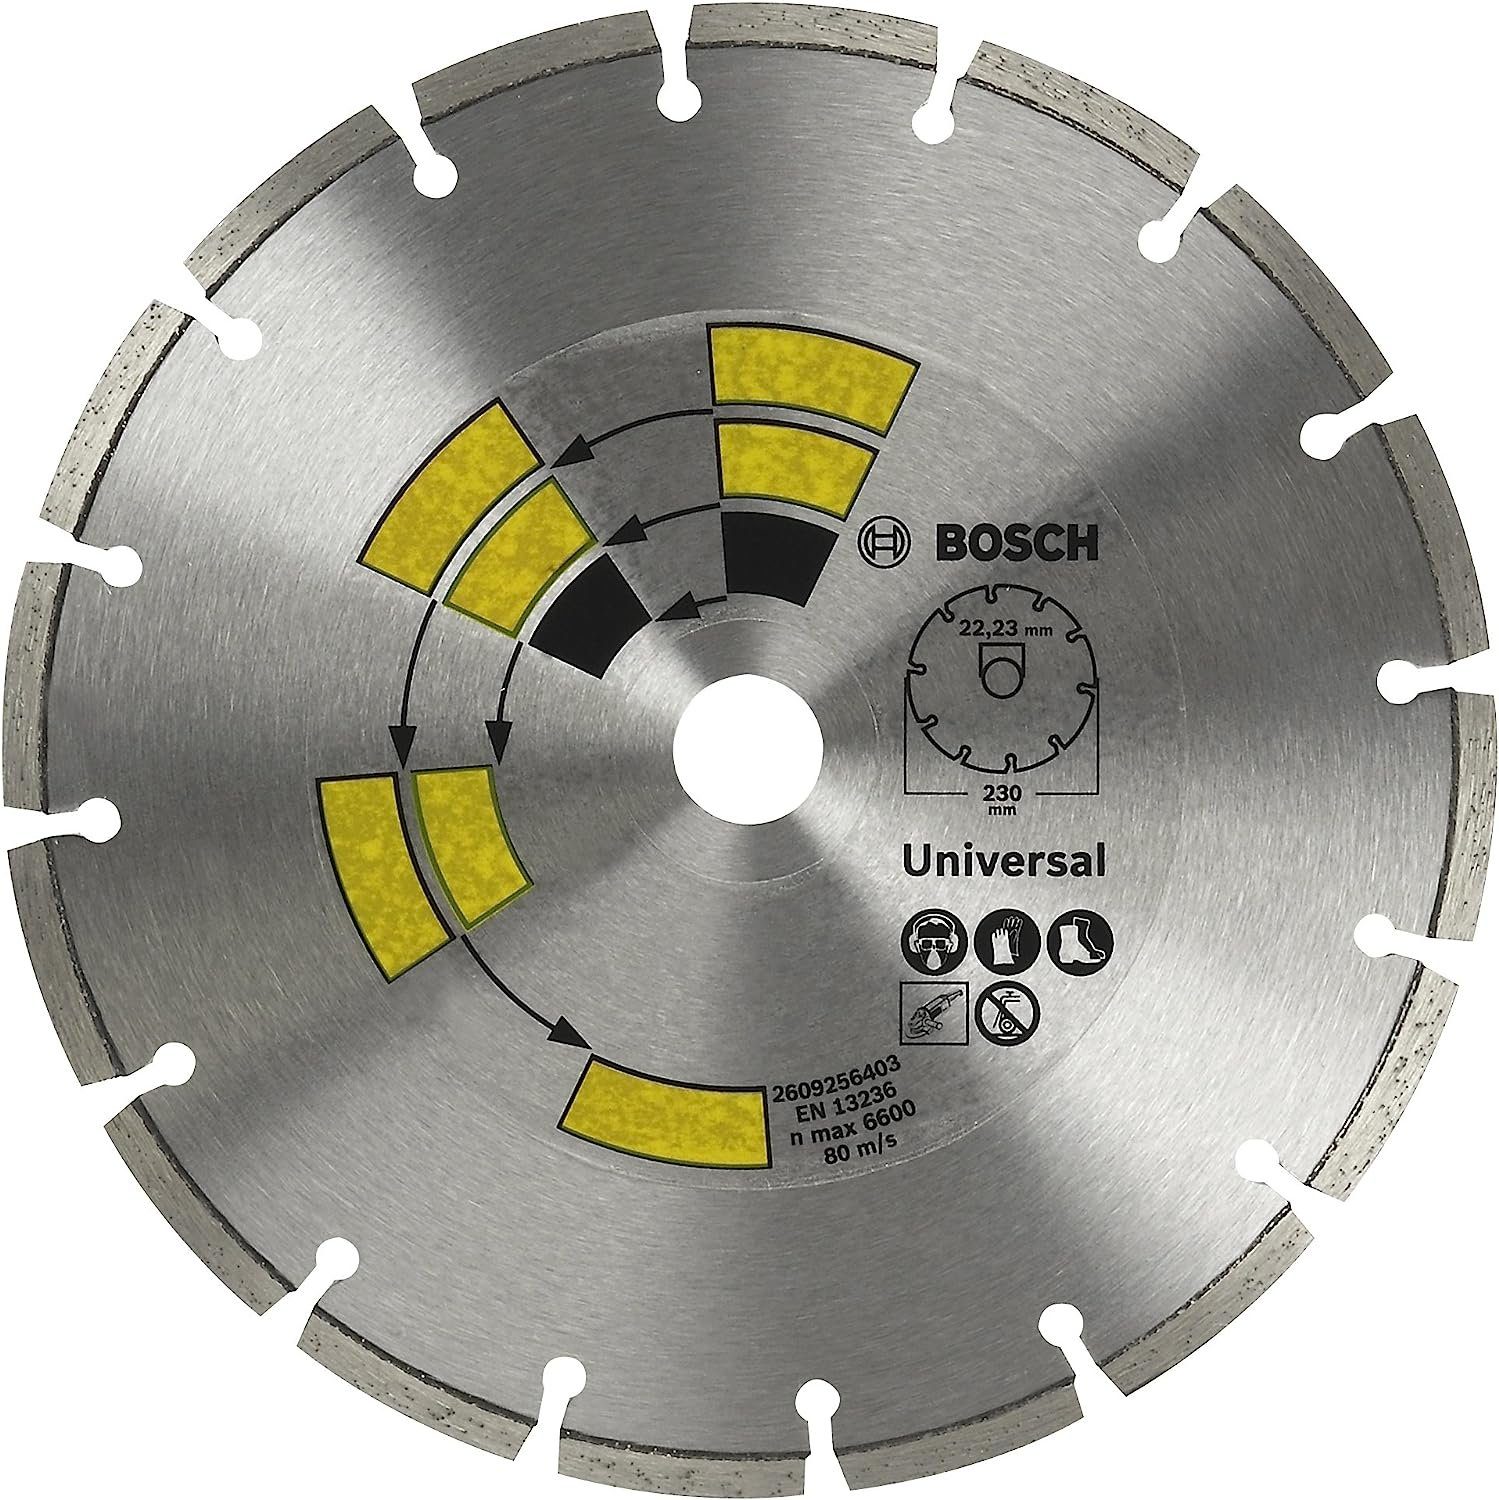 Bosch Universal Allzweck, 2609256400 Top mm 115 Diamanttrennscheibe Bohrfutter BOSCH